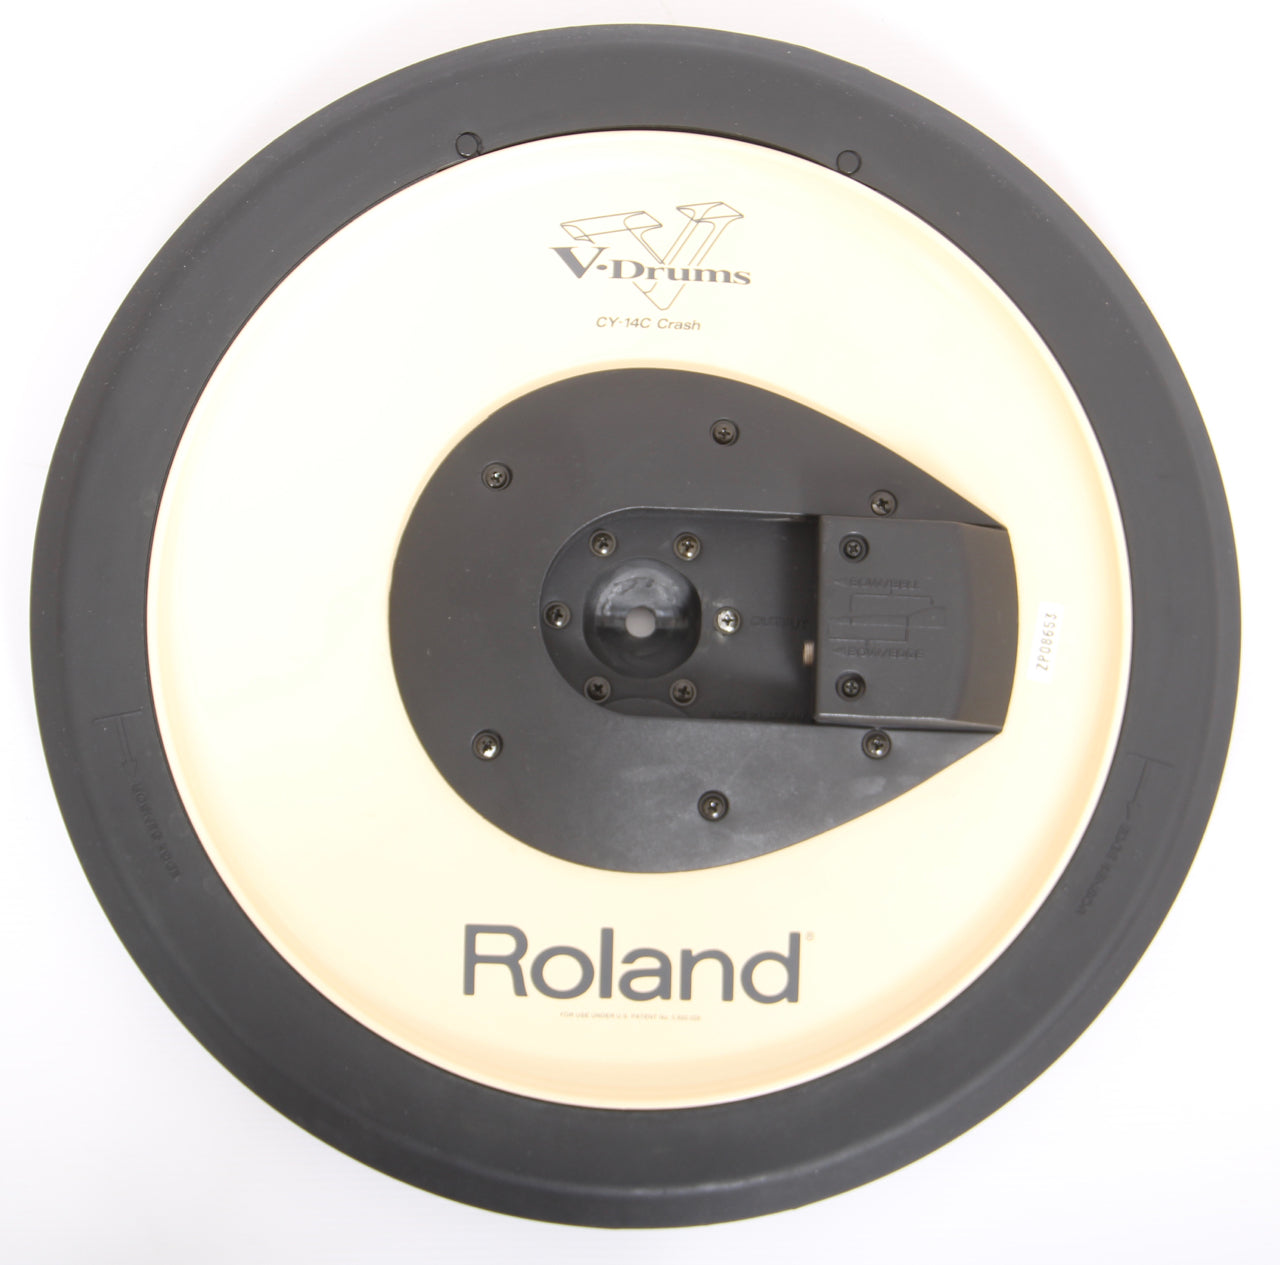 Roland CY-14C Crash Cymbal 14